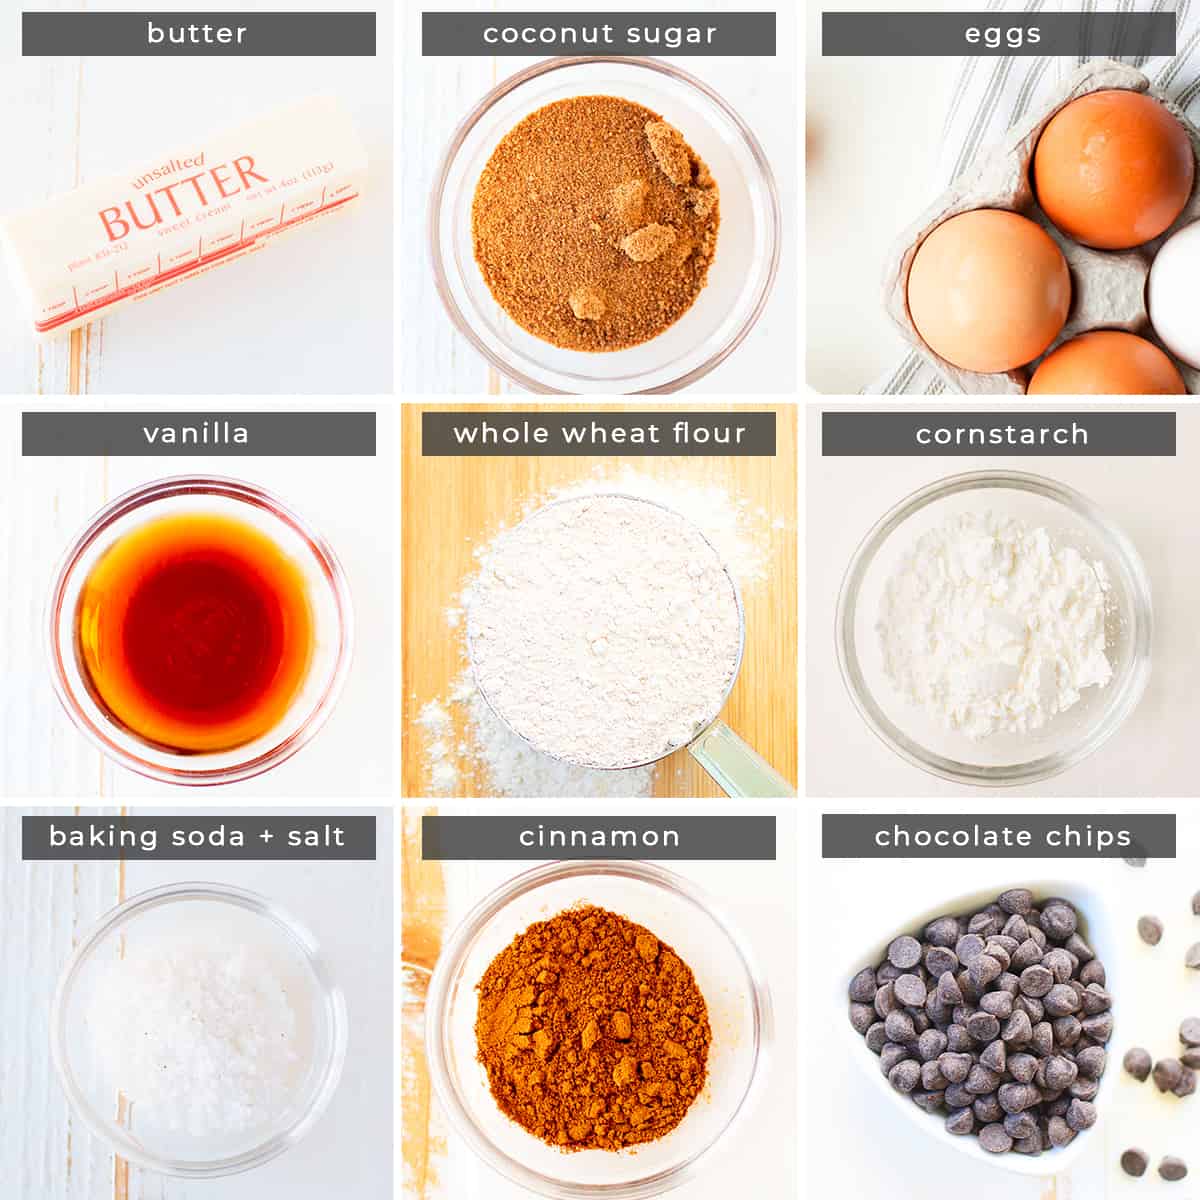 Image containing recipe ingredients butter, coconut sugar, eggs, vanilla, whole wheat flour, cornstarch, baking soda + salt, cinnamon, and chocolate chips. 